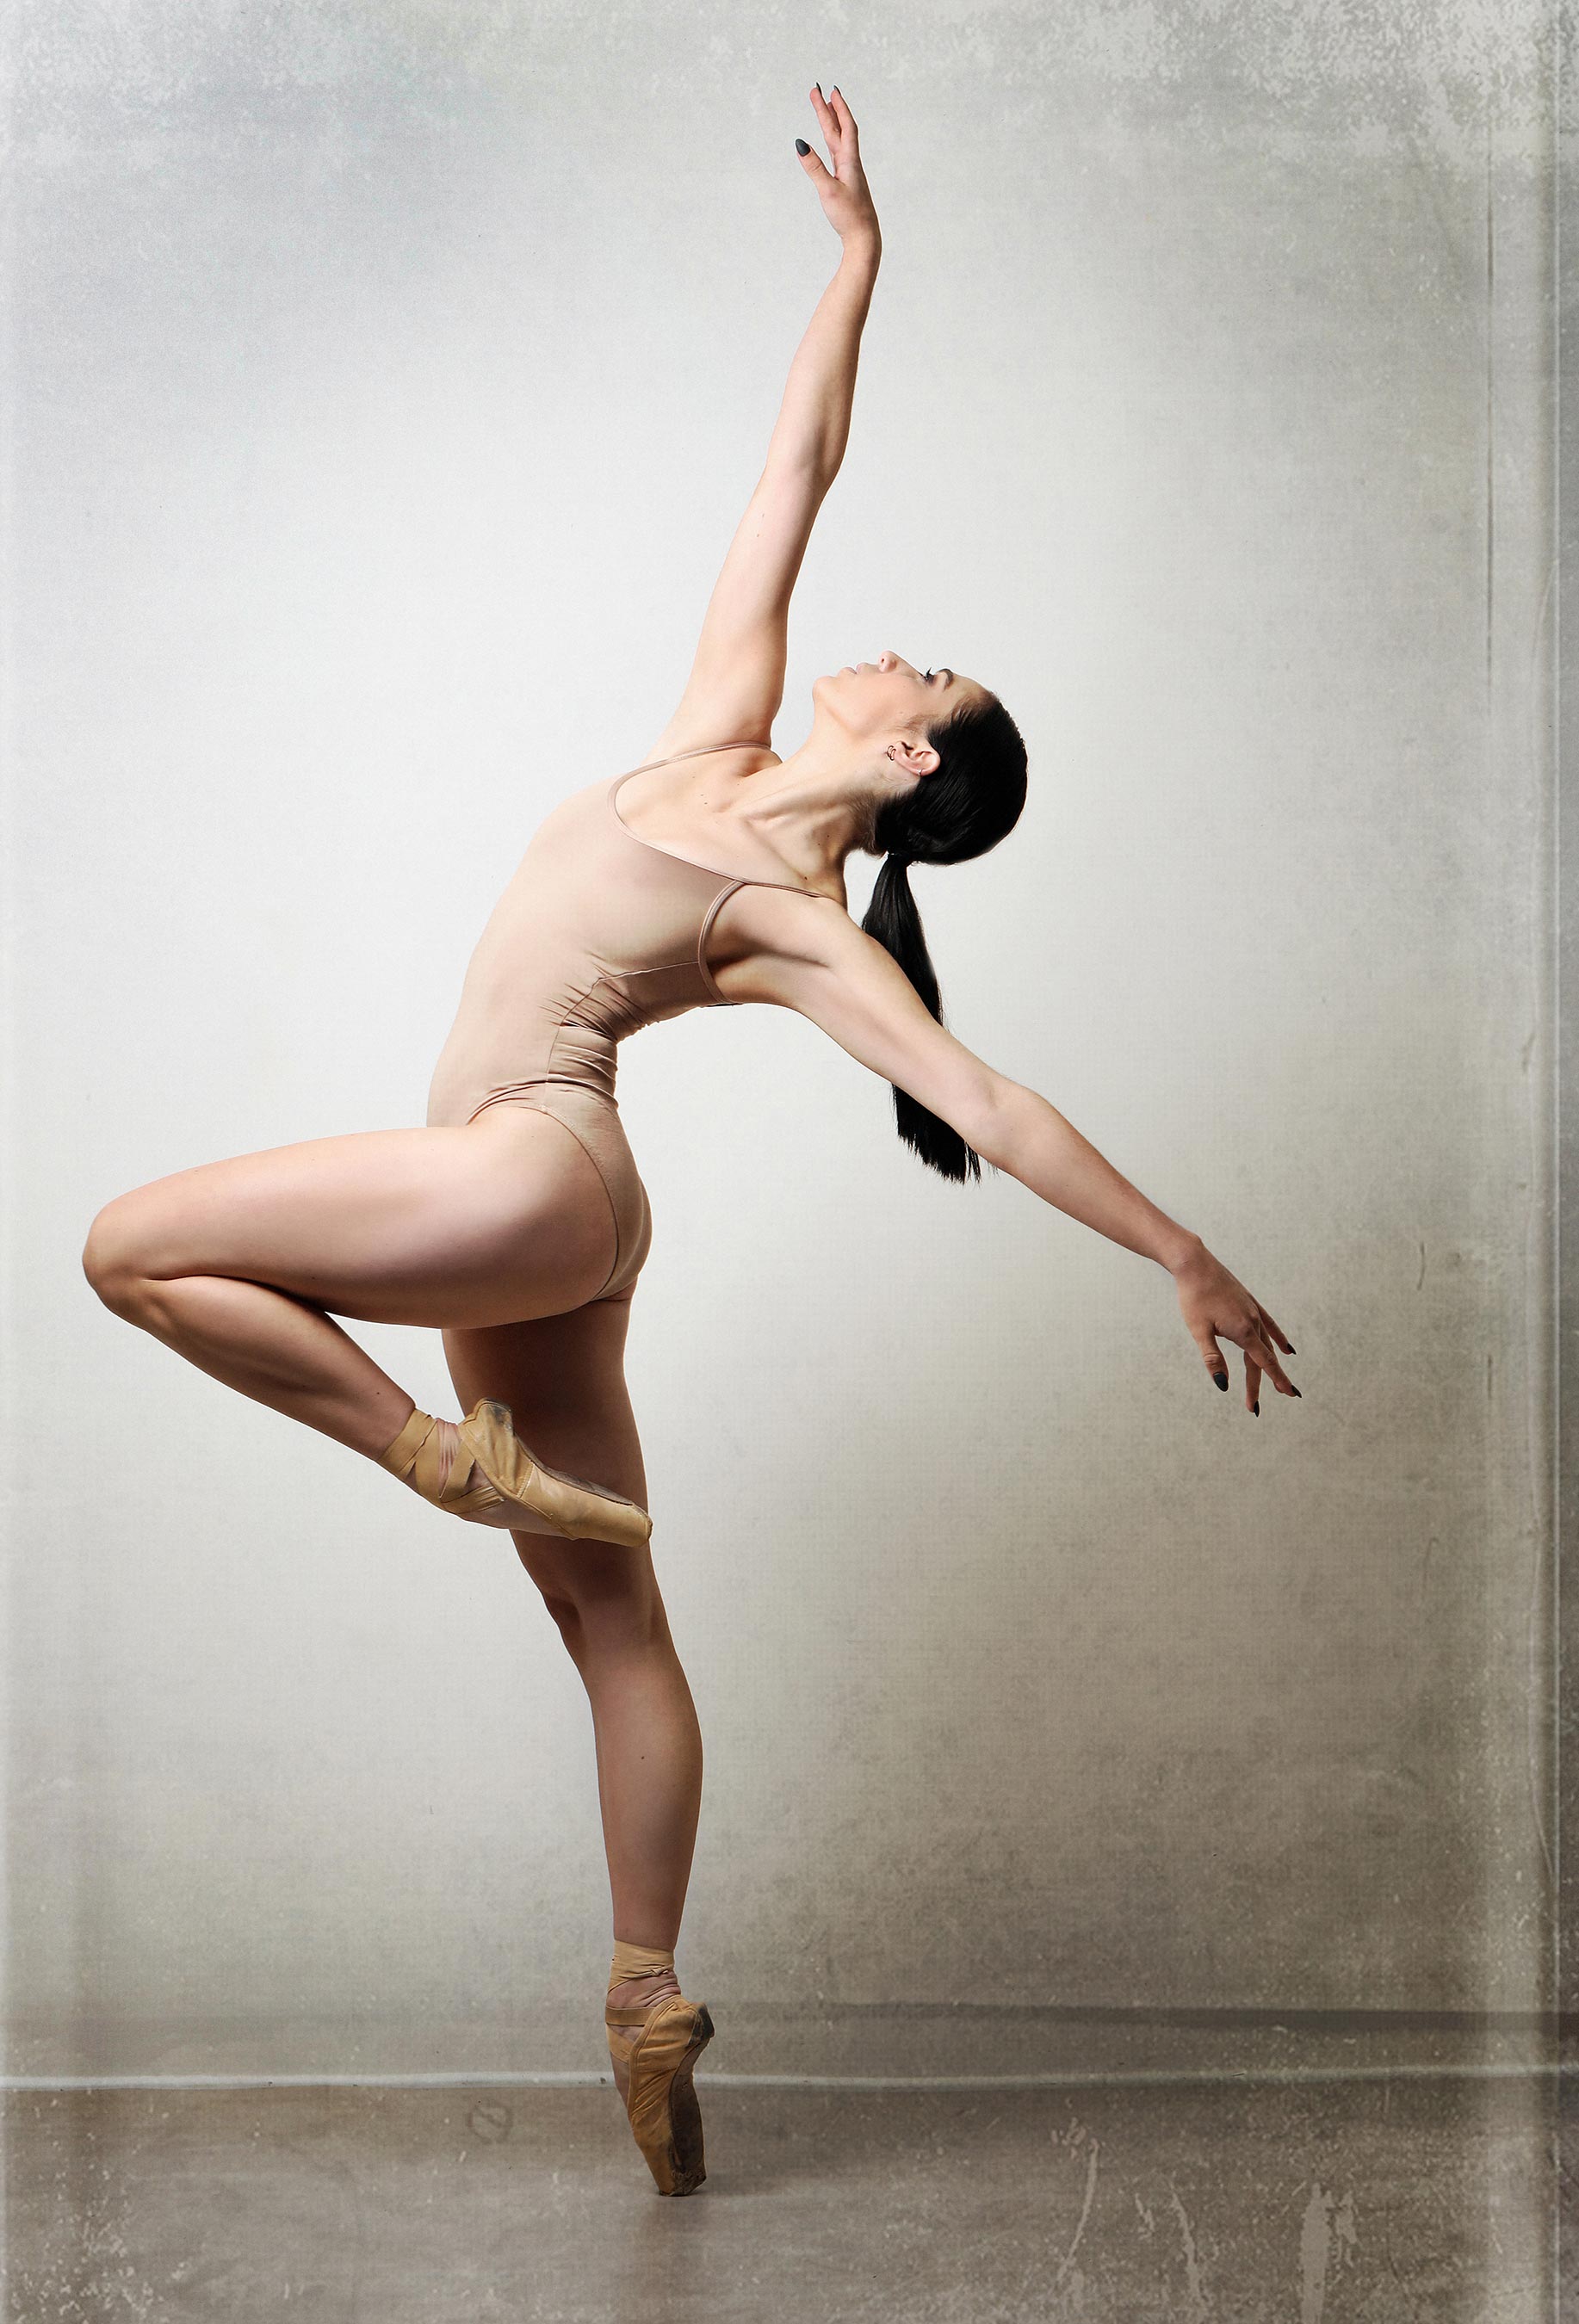 portrait-photographer-london-ontariot-ballerina-dancer-professional-photography-studio-emily-skubic